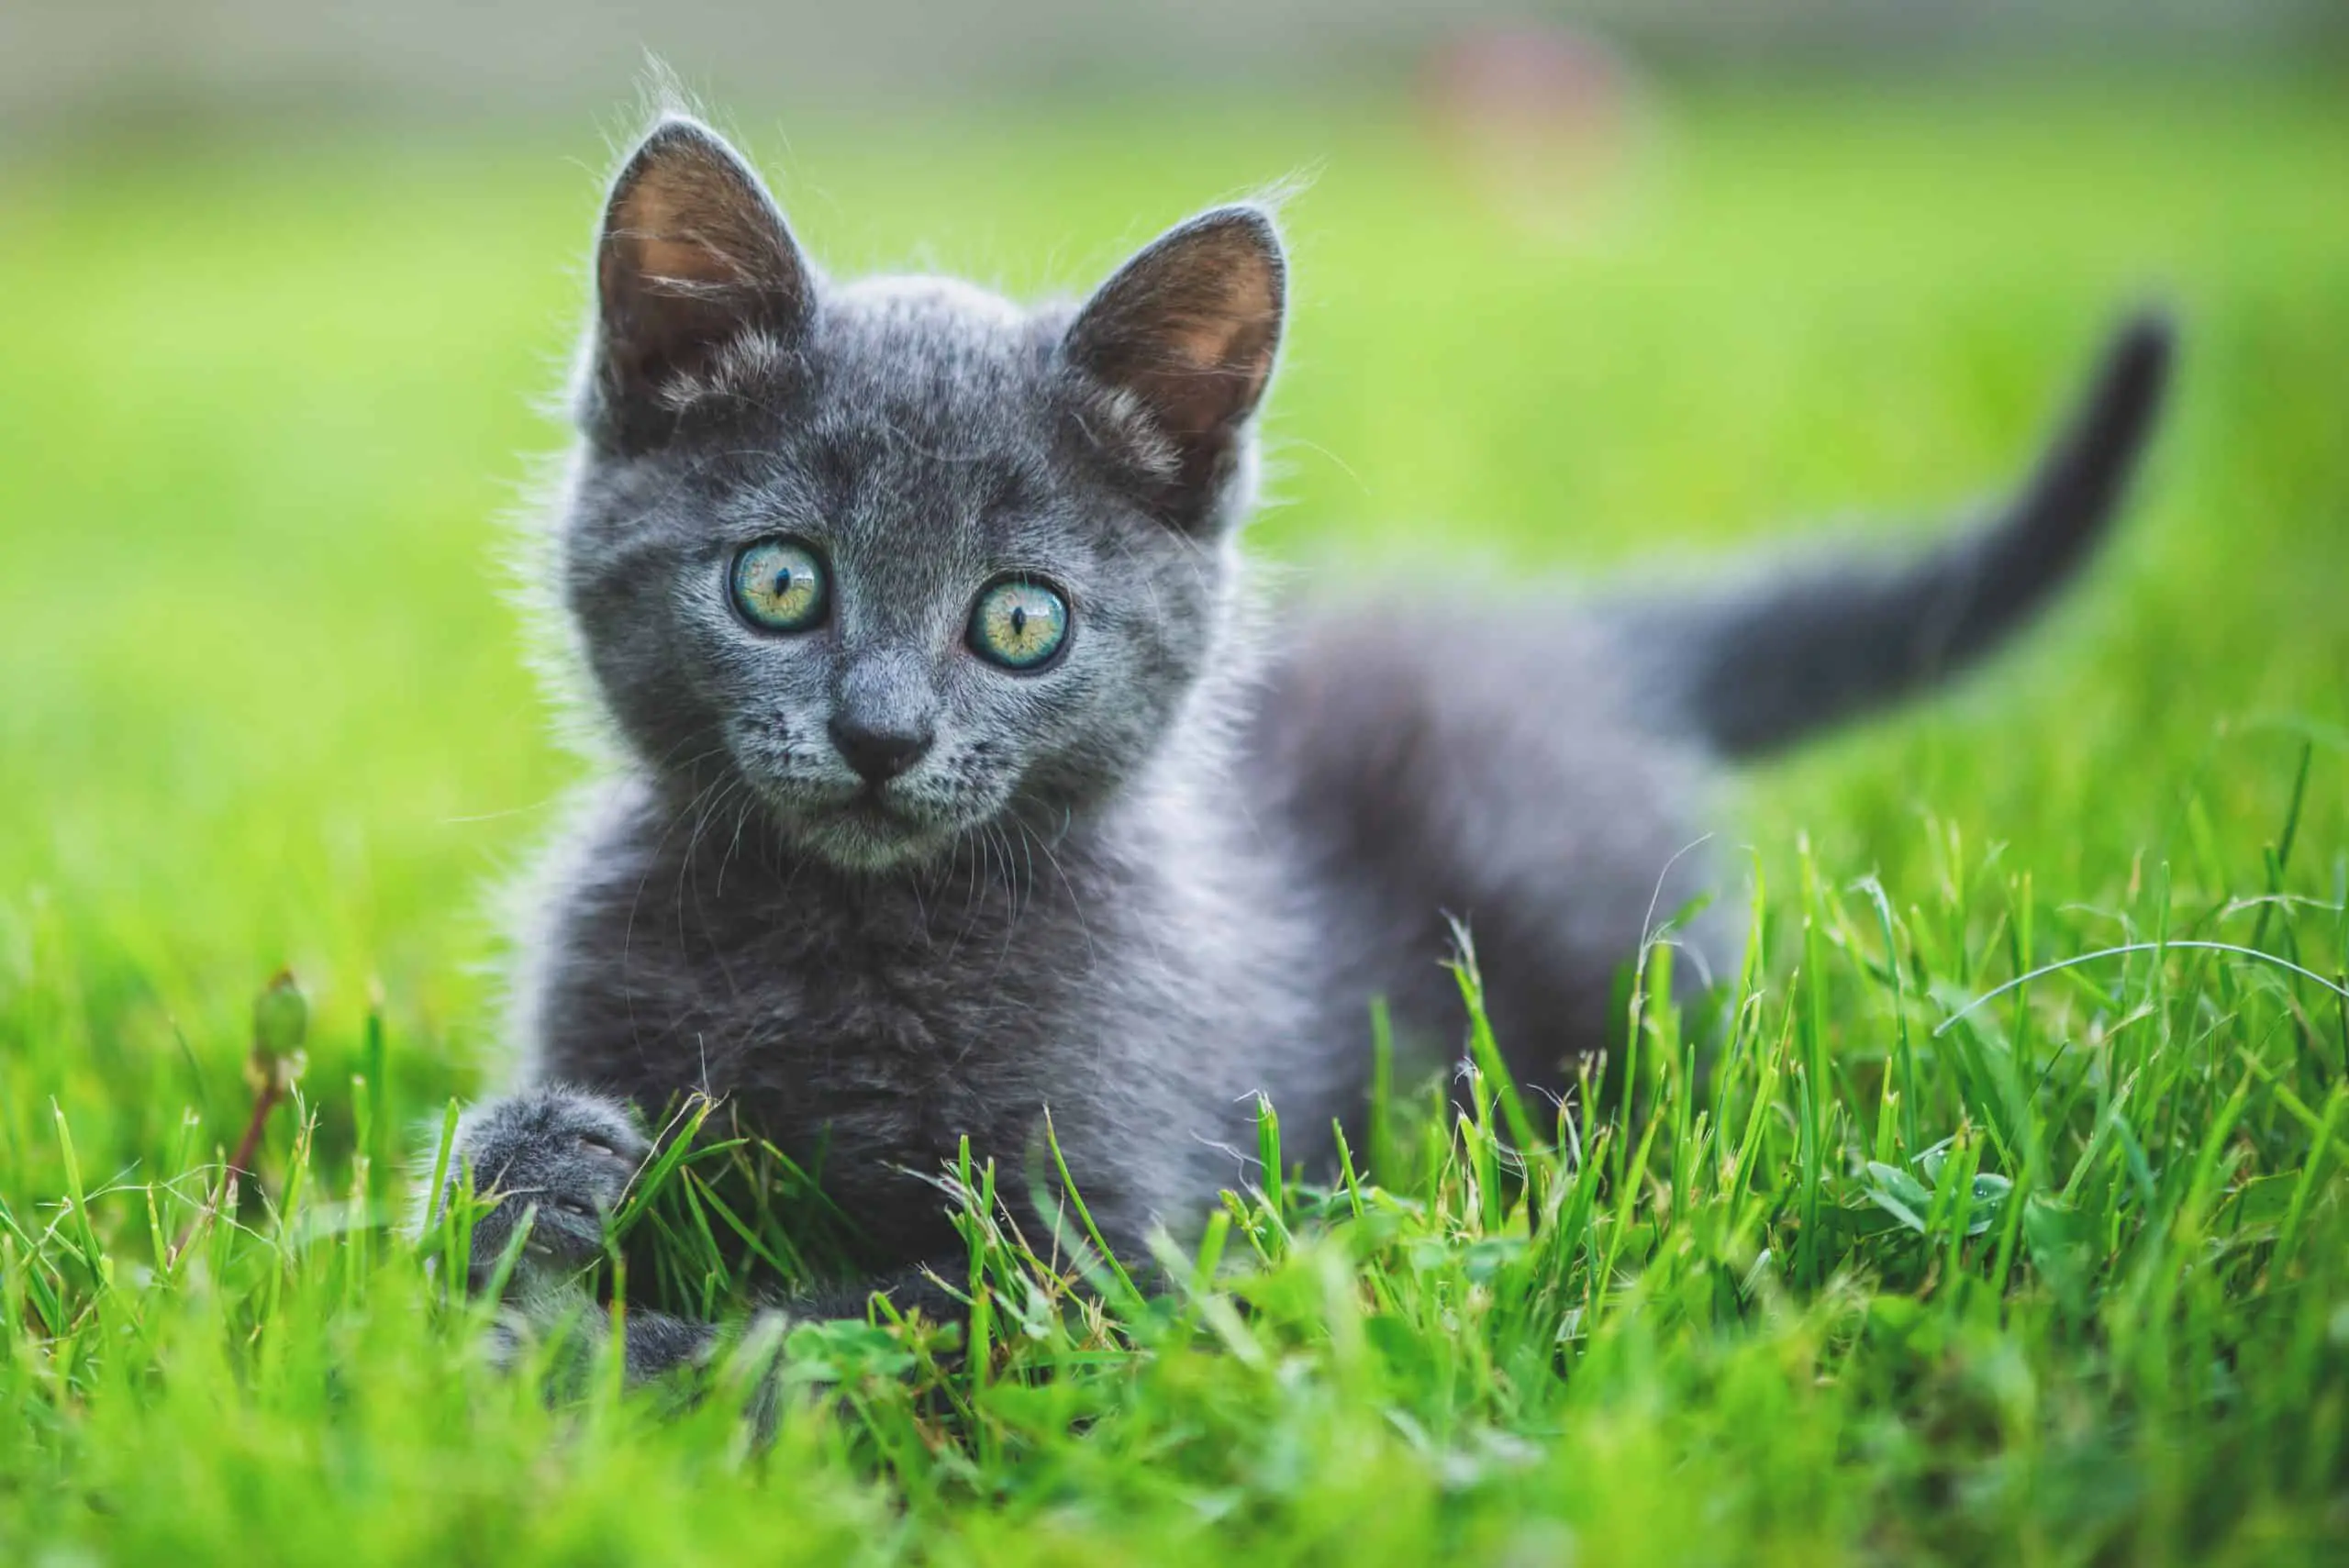 Make sure the weed killer is pet-safe for your feline family member